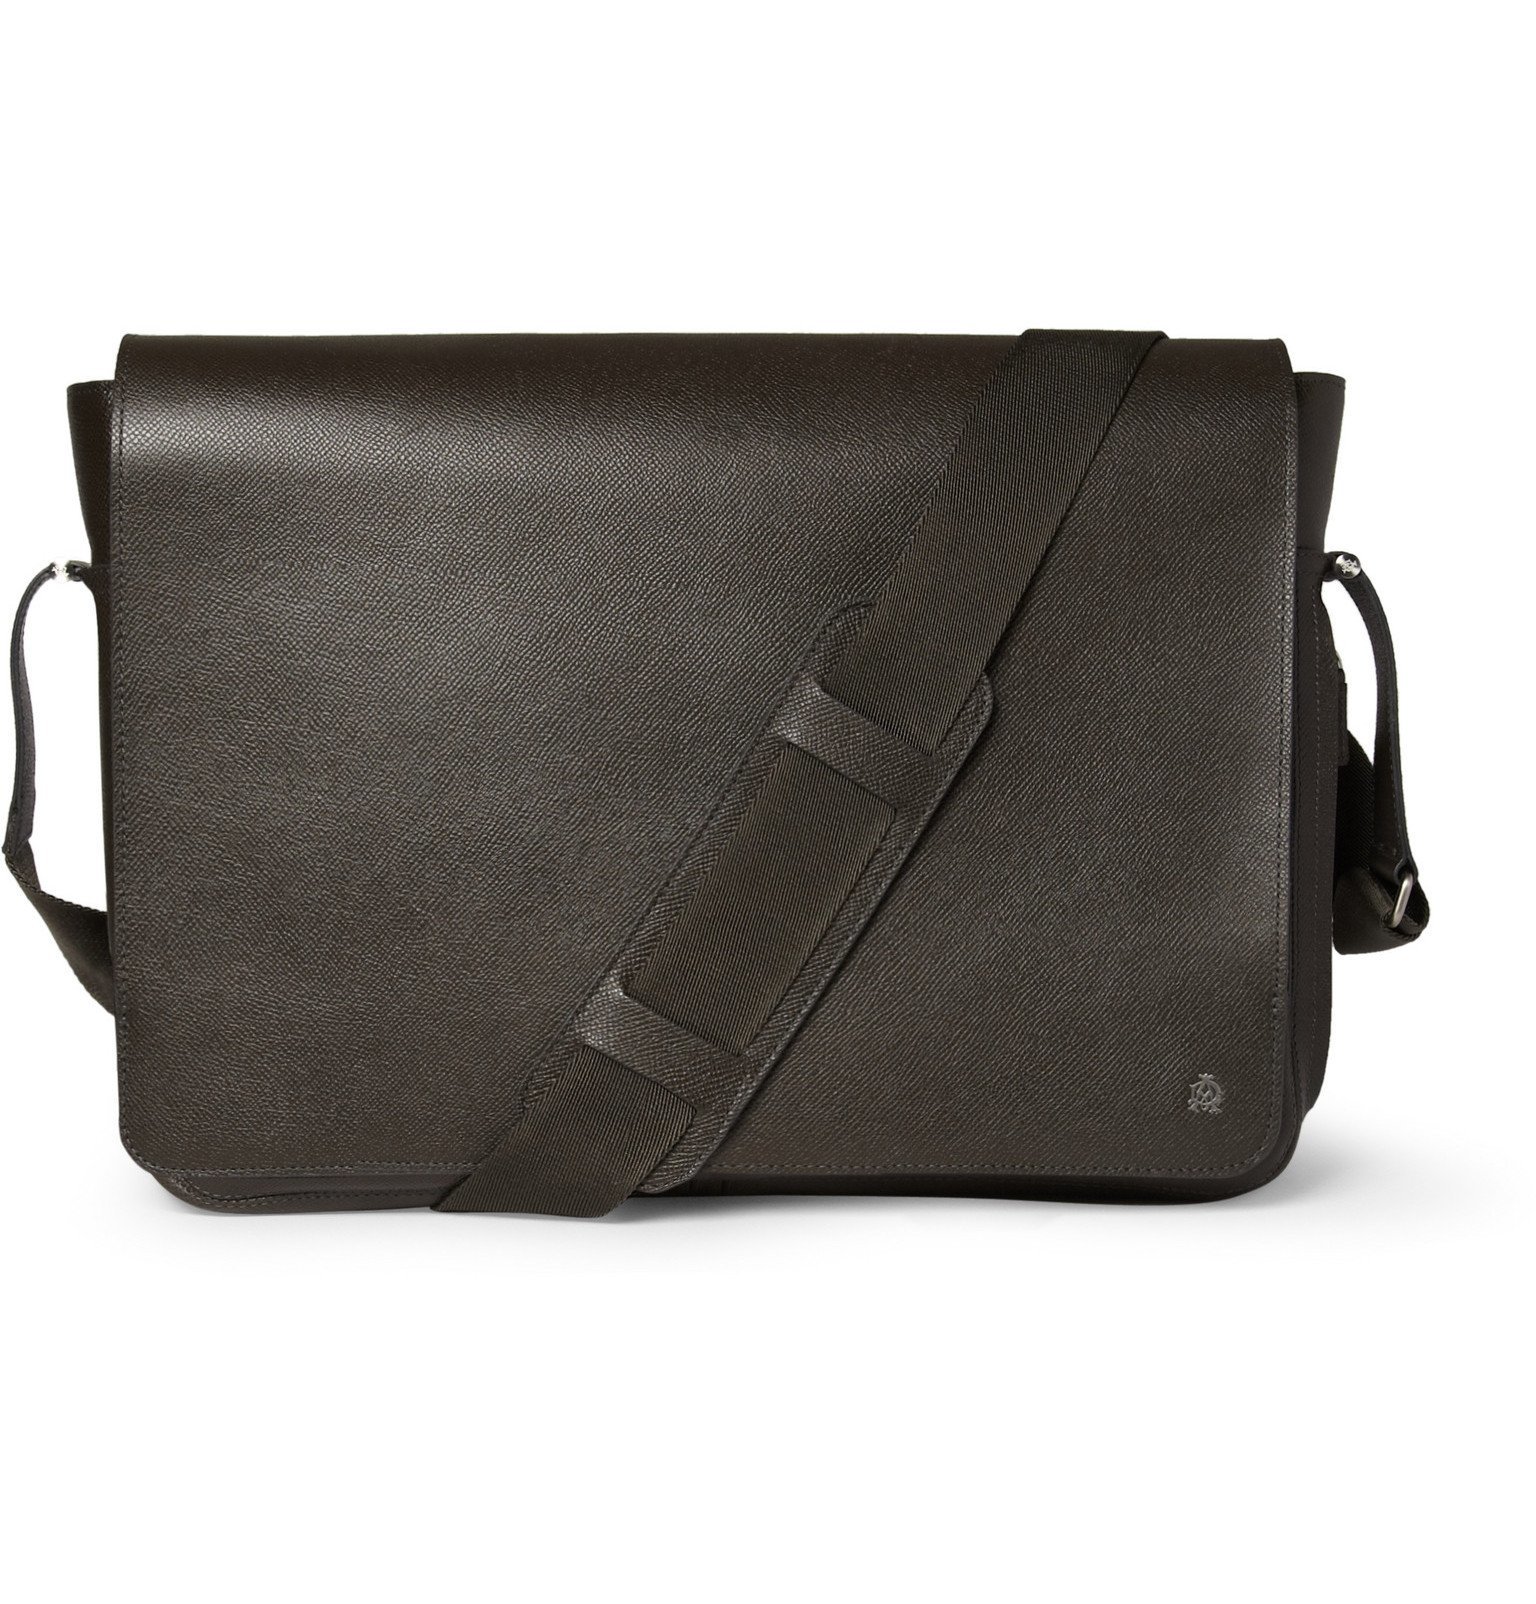 Dunhill - Cadogan Textured-Leather Messenger Bag - Brown Dunhill